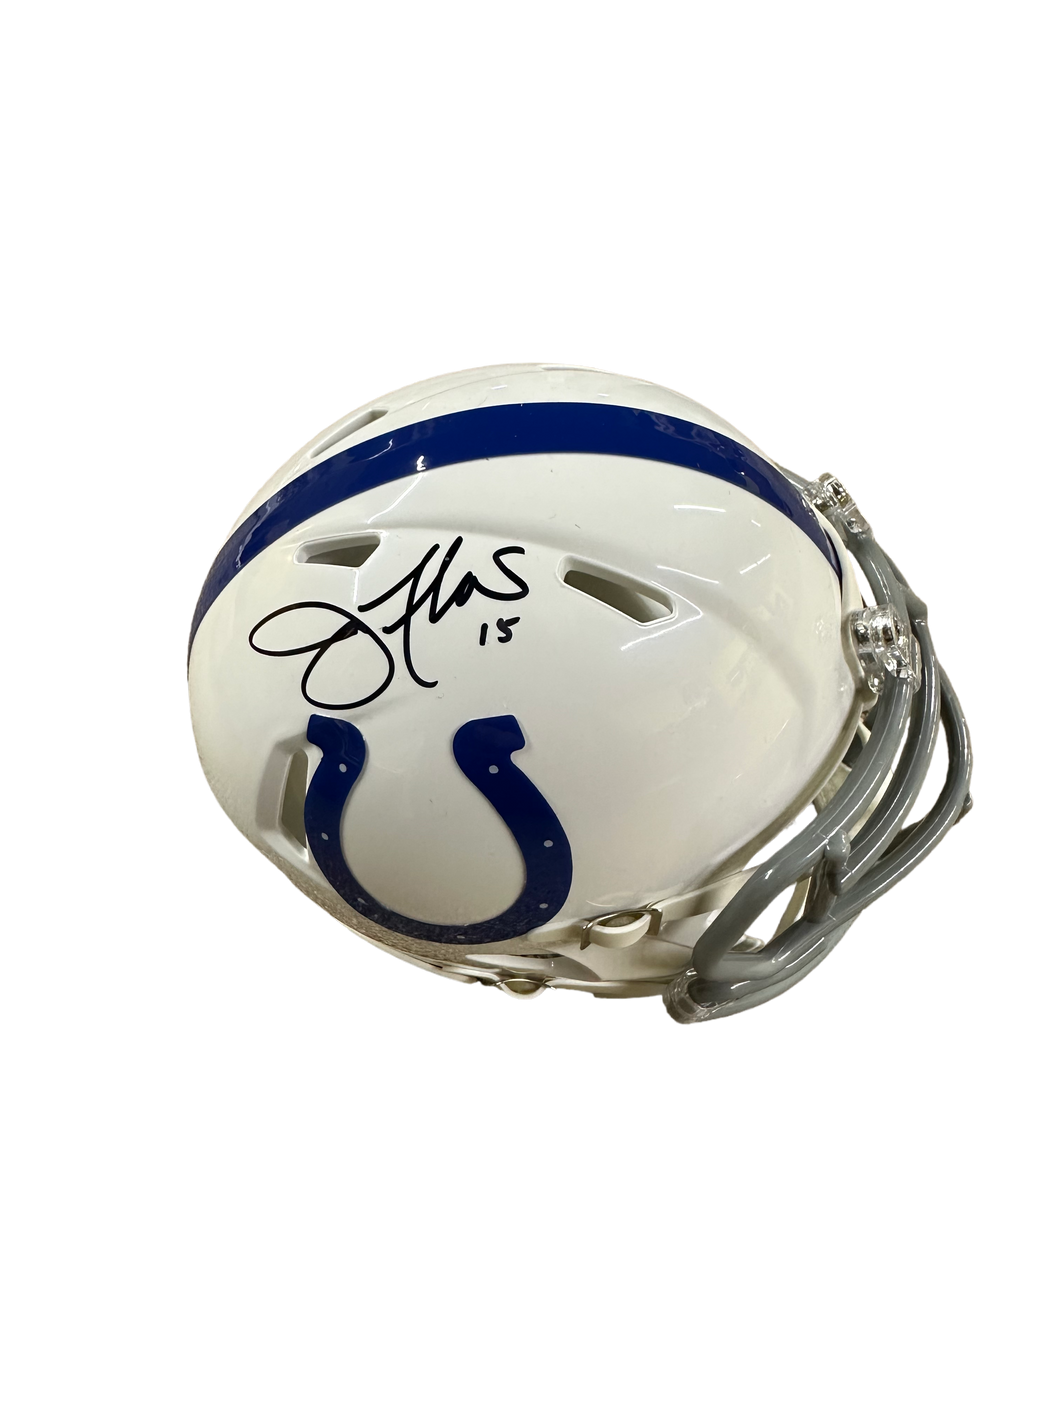 Indianapolis Colts Joe Flacco Hand Signed Autographed Mini Helmet JSA COA